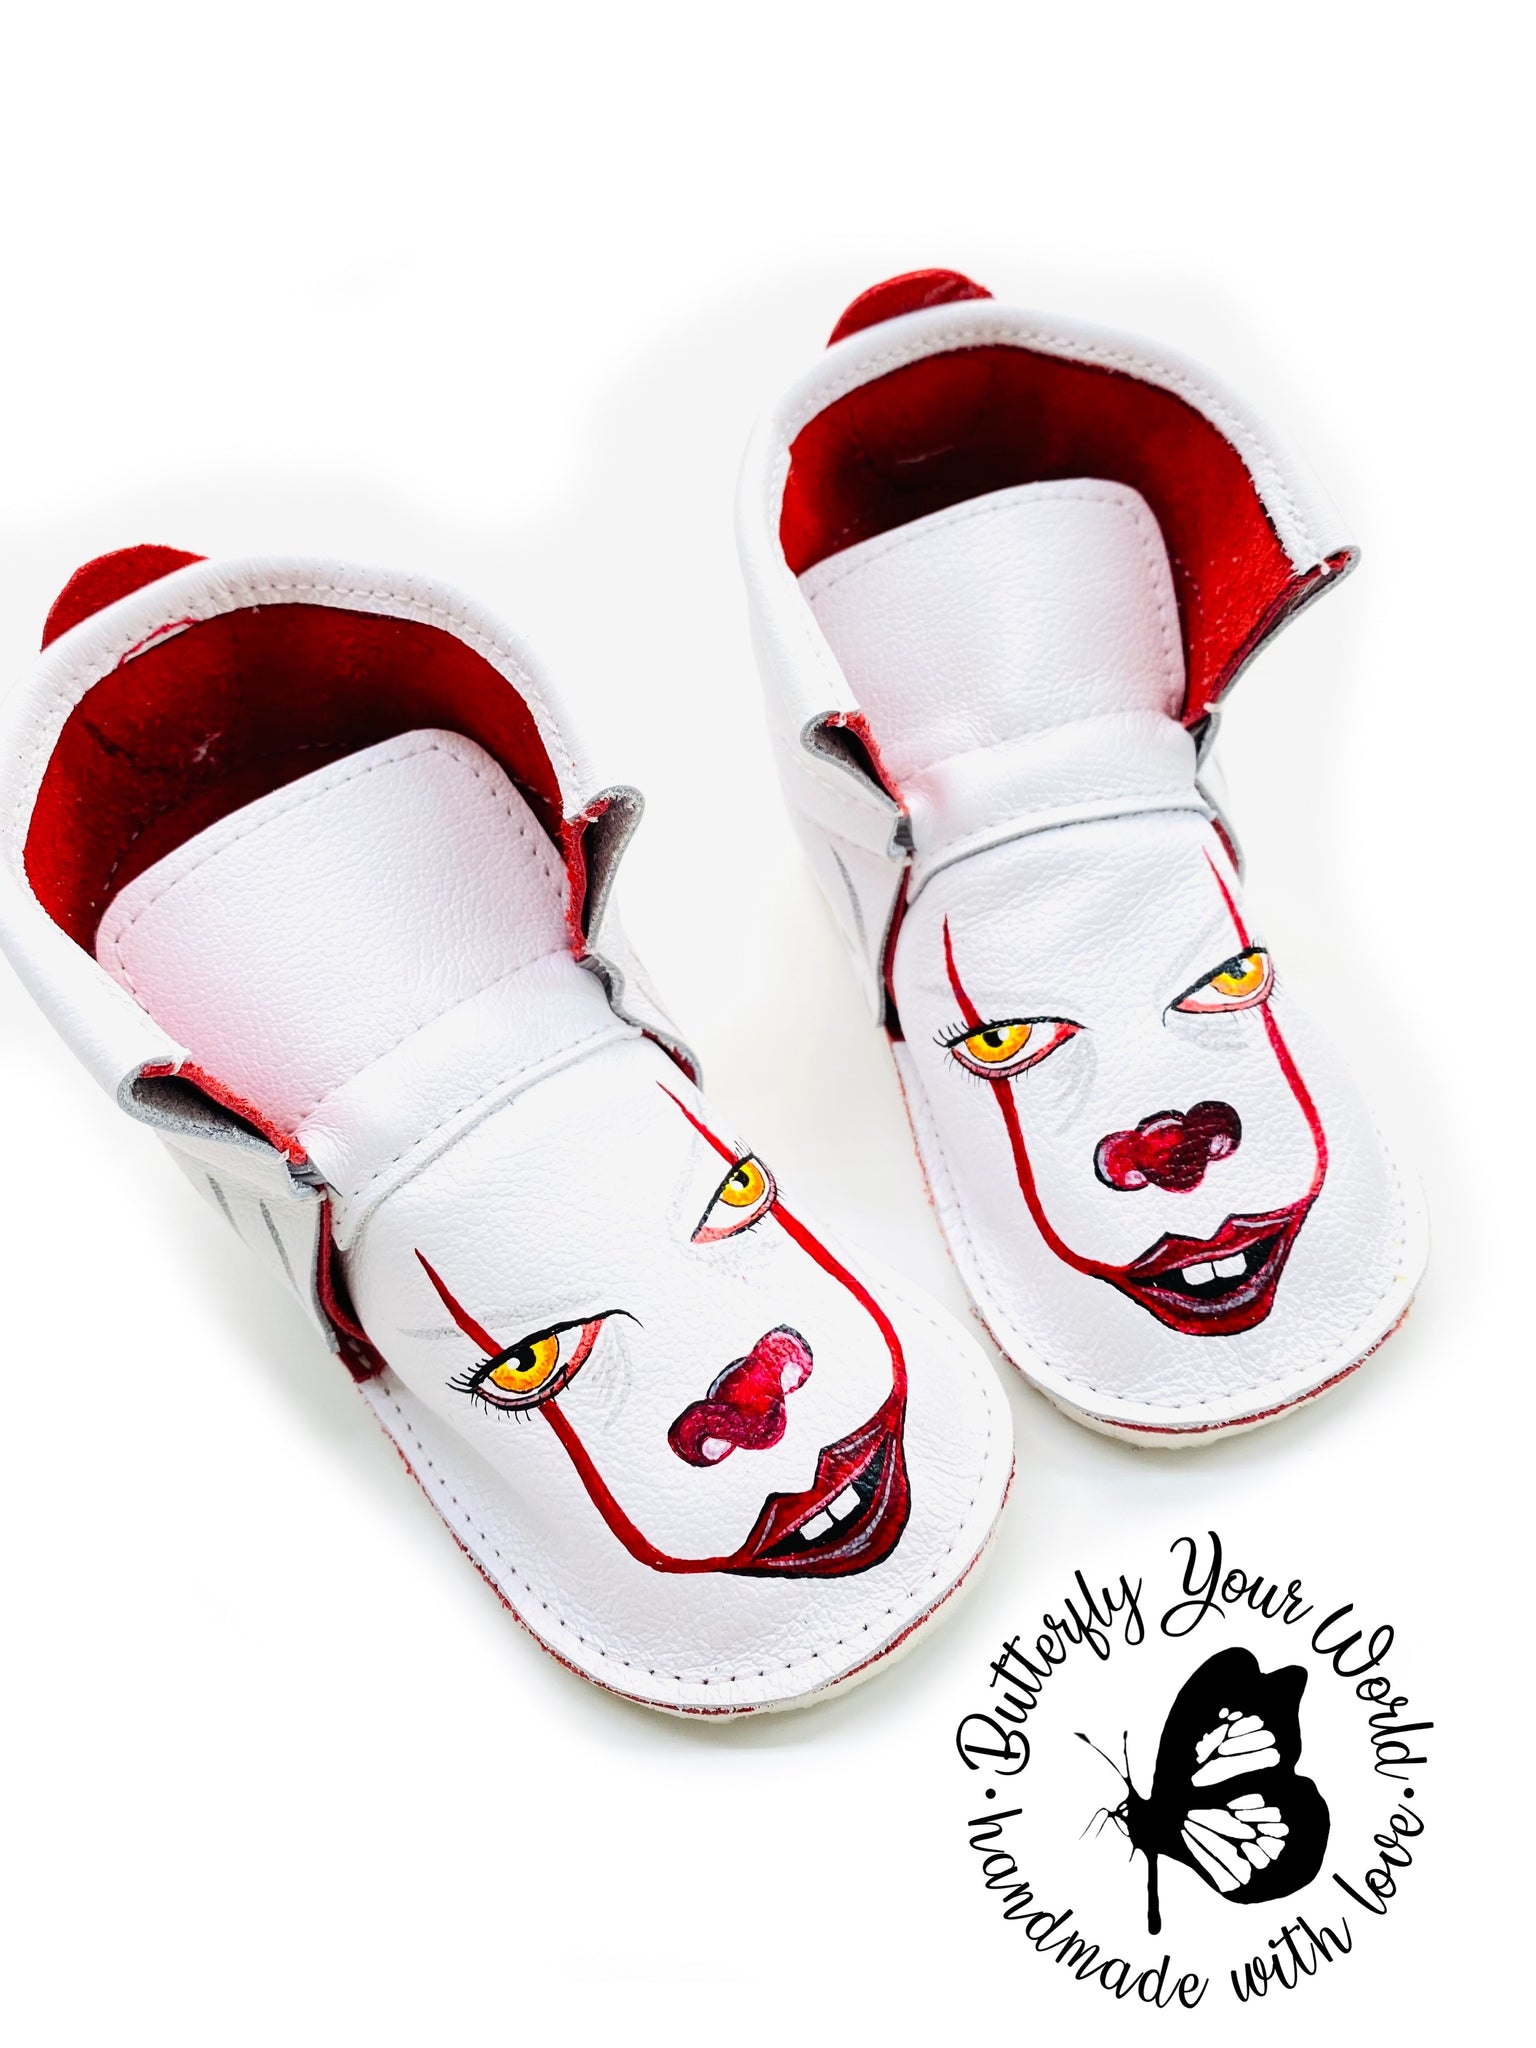 Creepy Halloween clown shoes